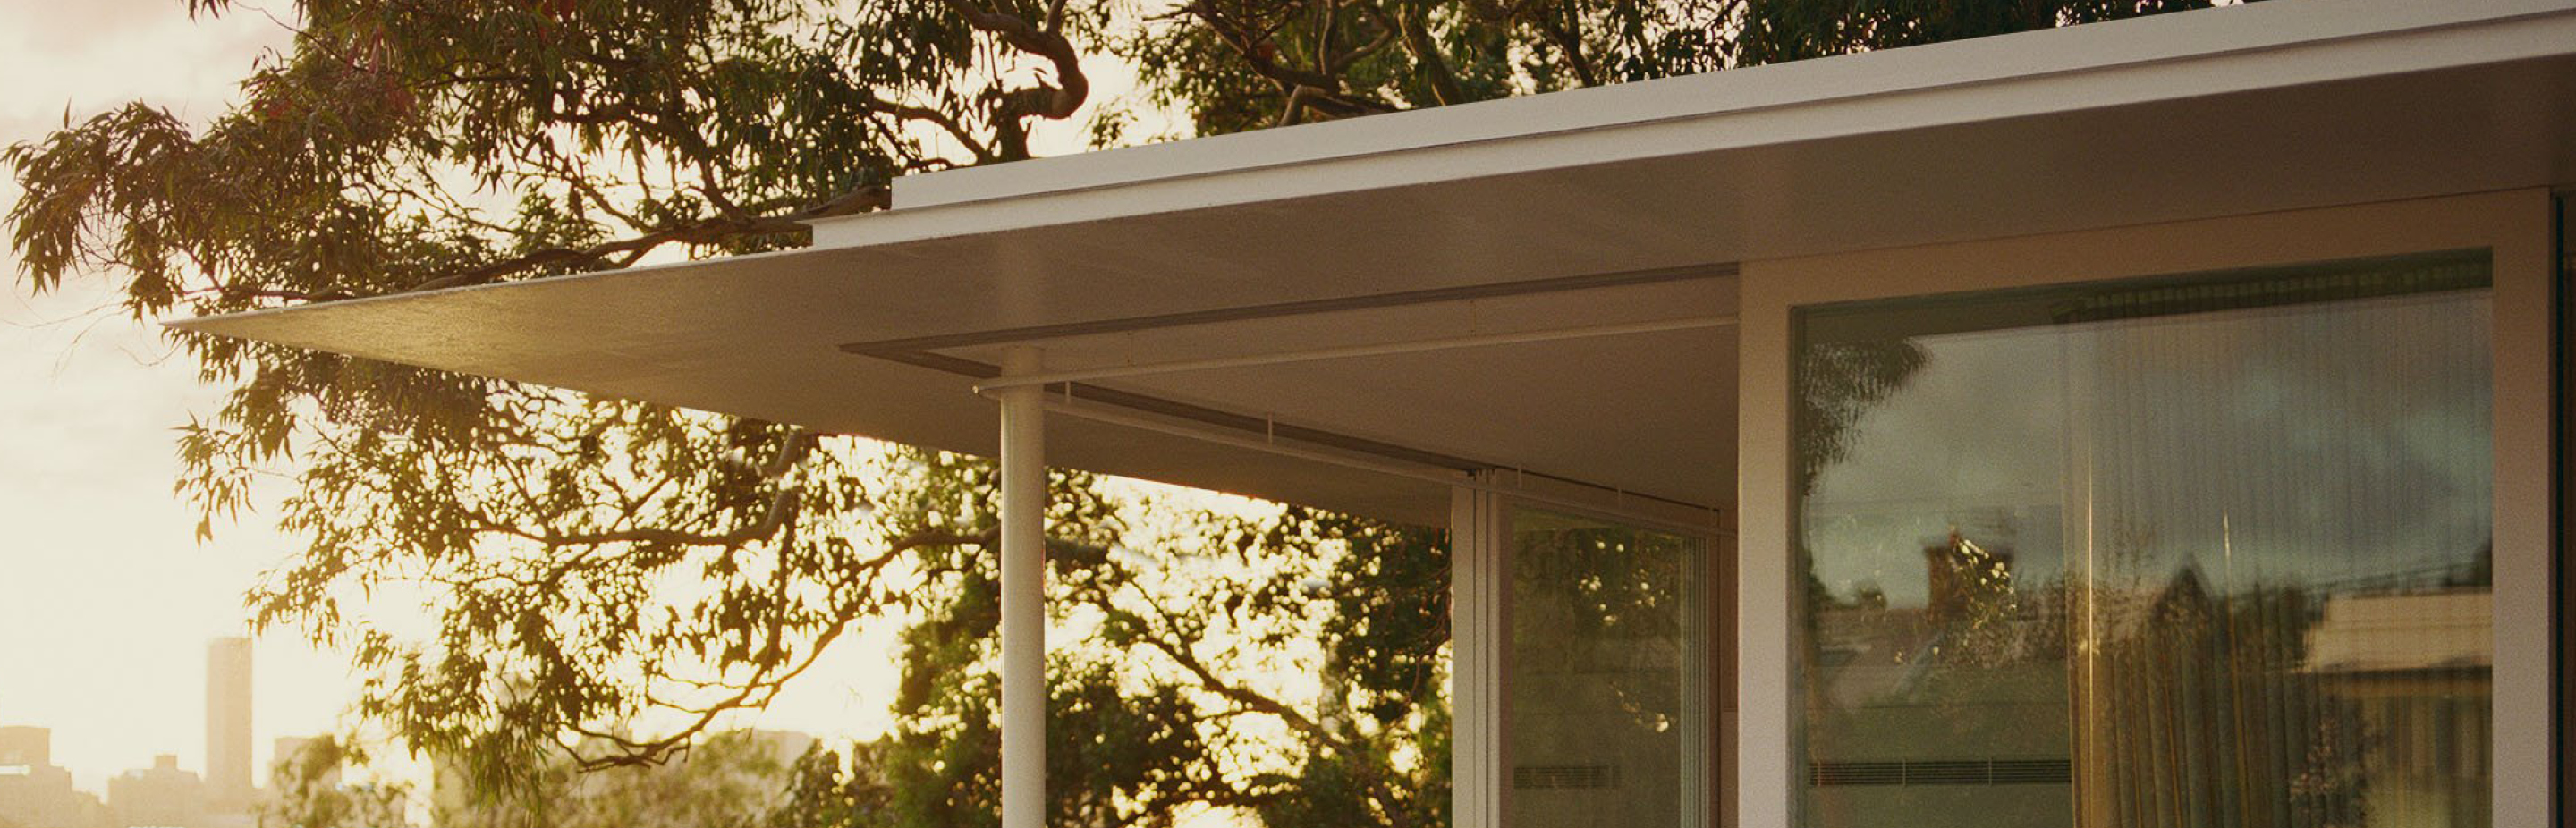 Sleek modern roof with rectangular glass windows